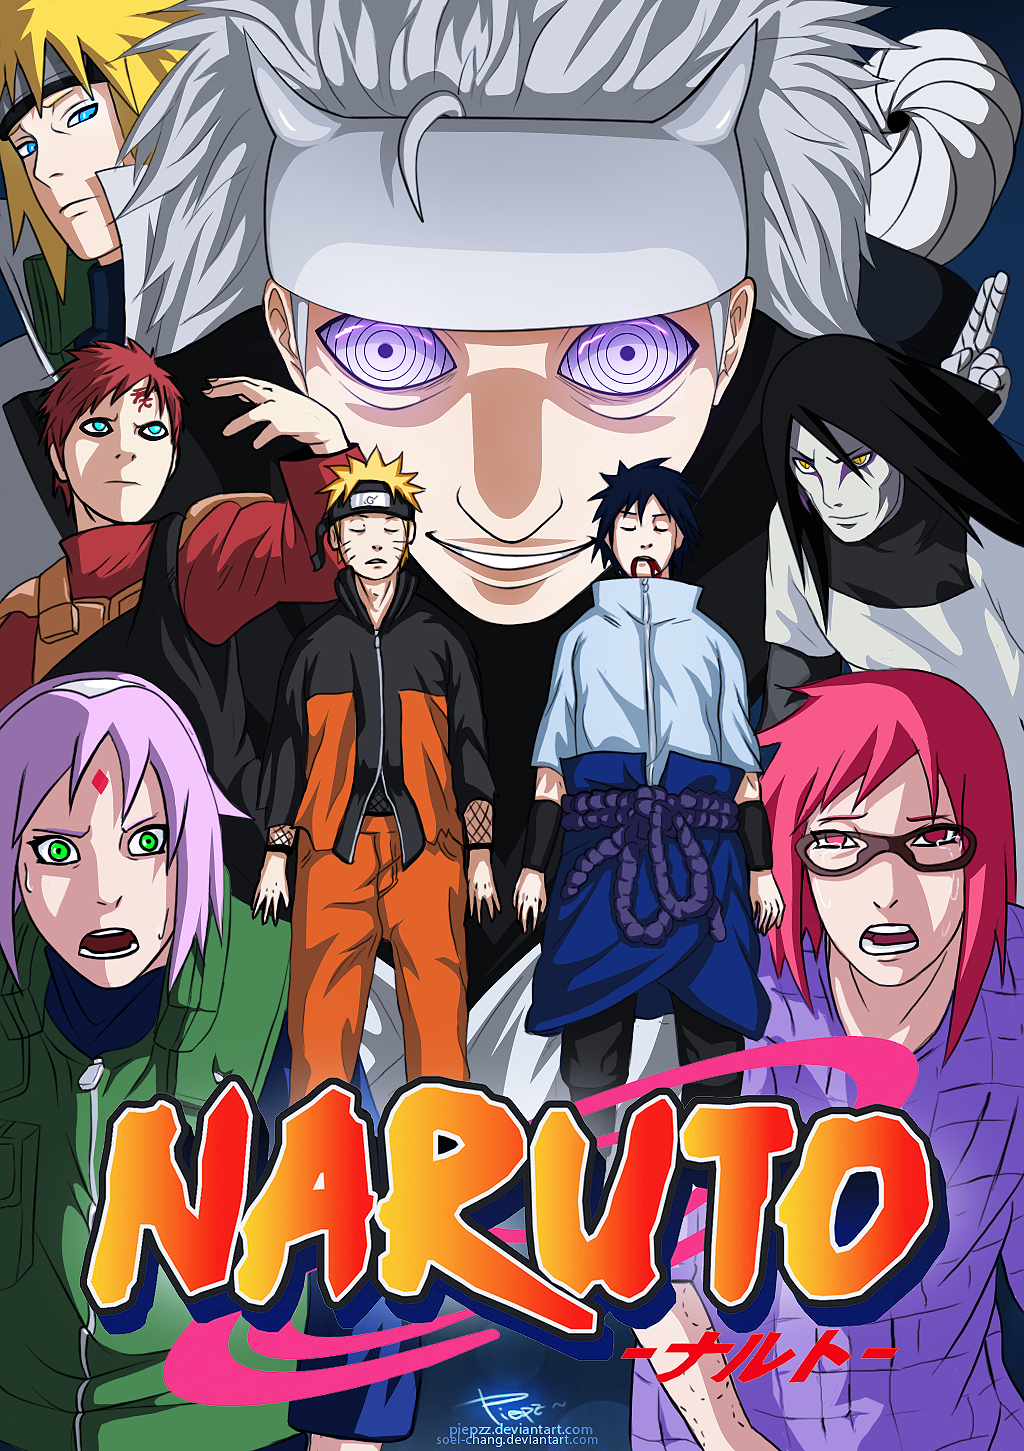 Naruto Shippuuden DVD-Cover + Label (Vol.9) by Pharuk on DeviantArt